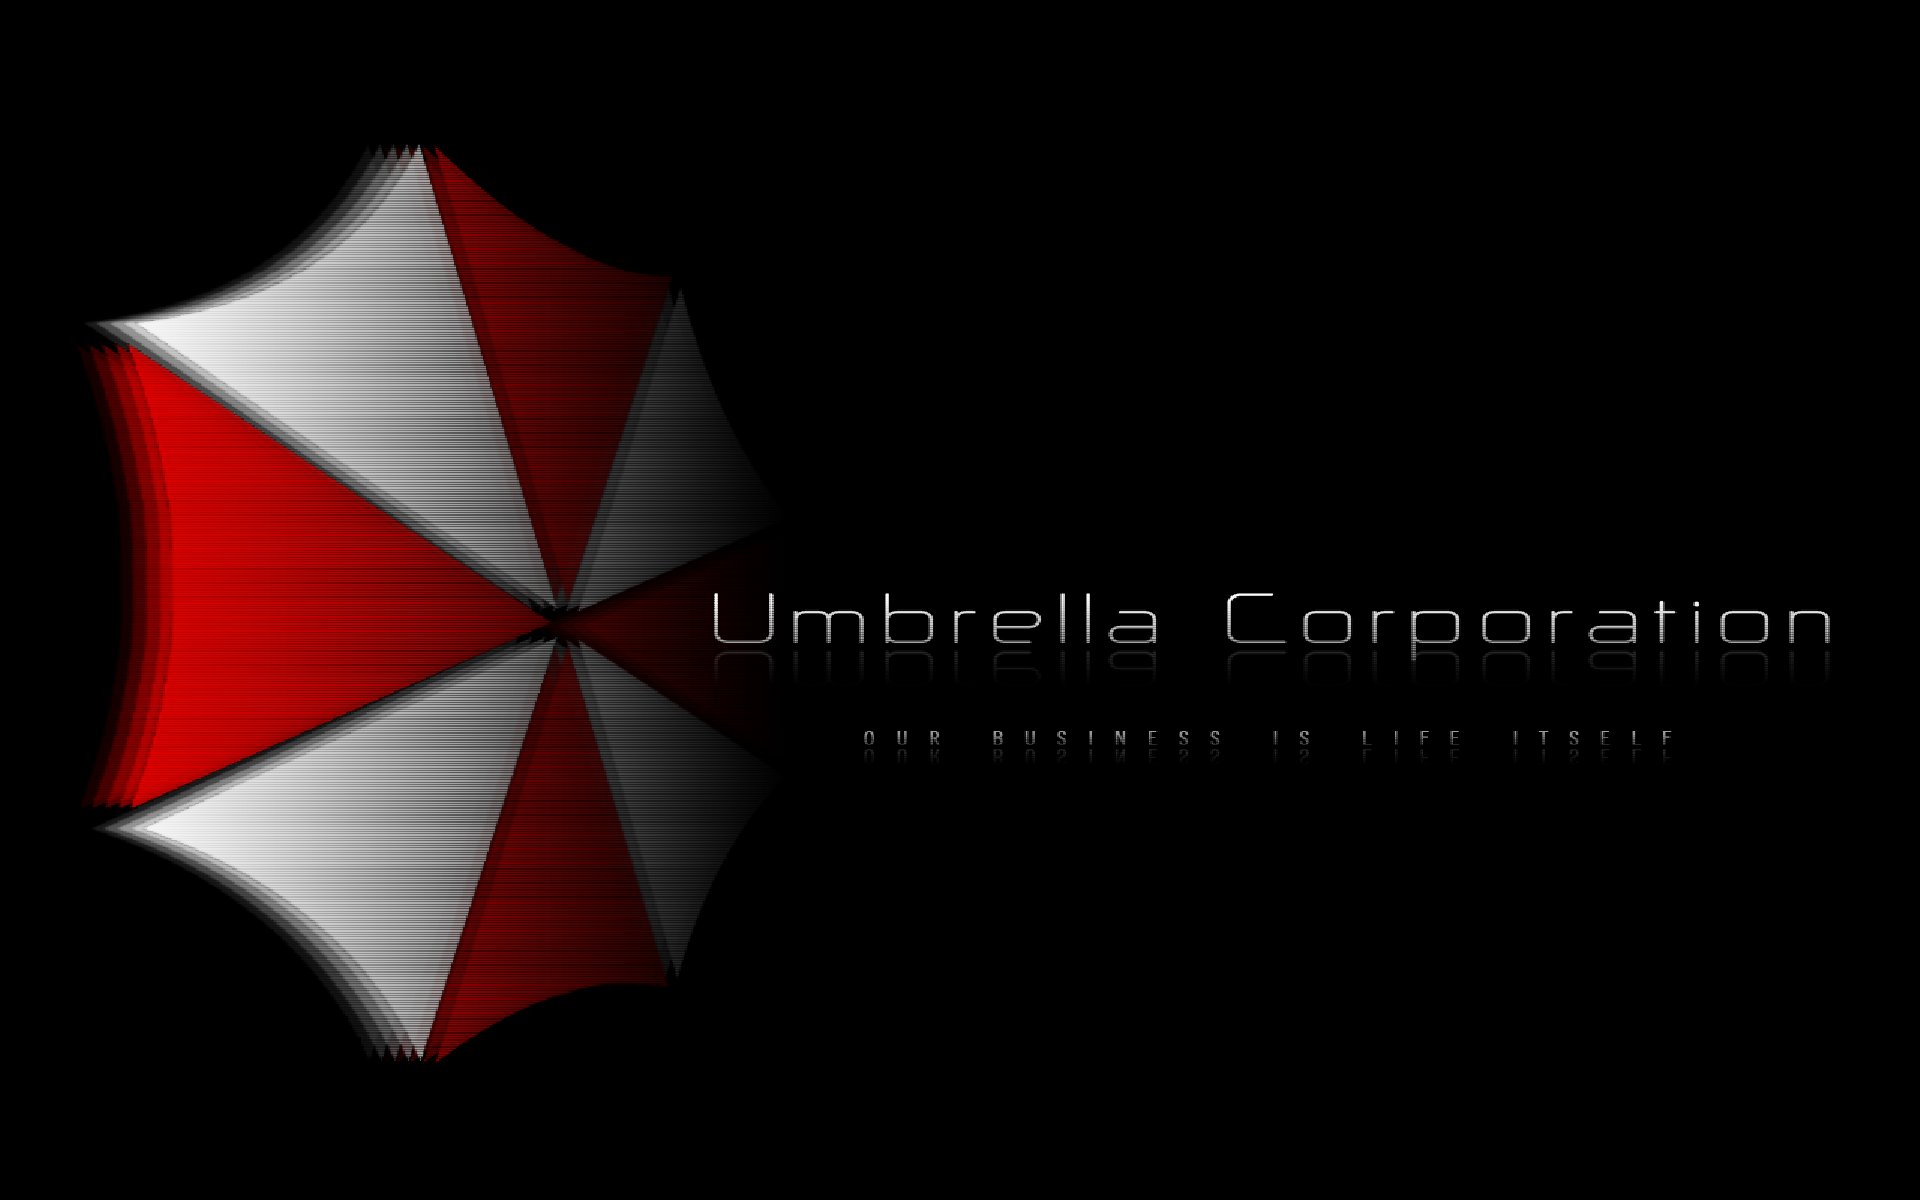 Umbrella Corp  wallpaper 1920x1200 307543 WallpaperUP